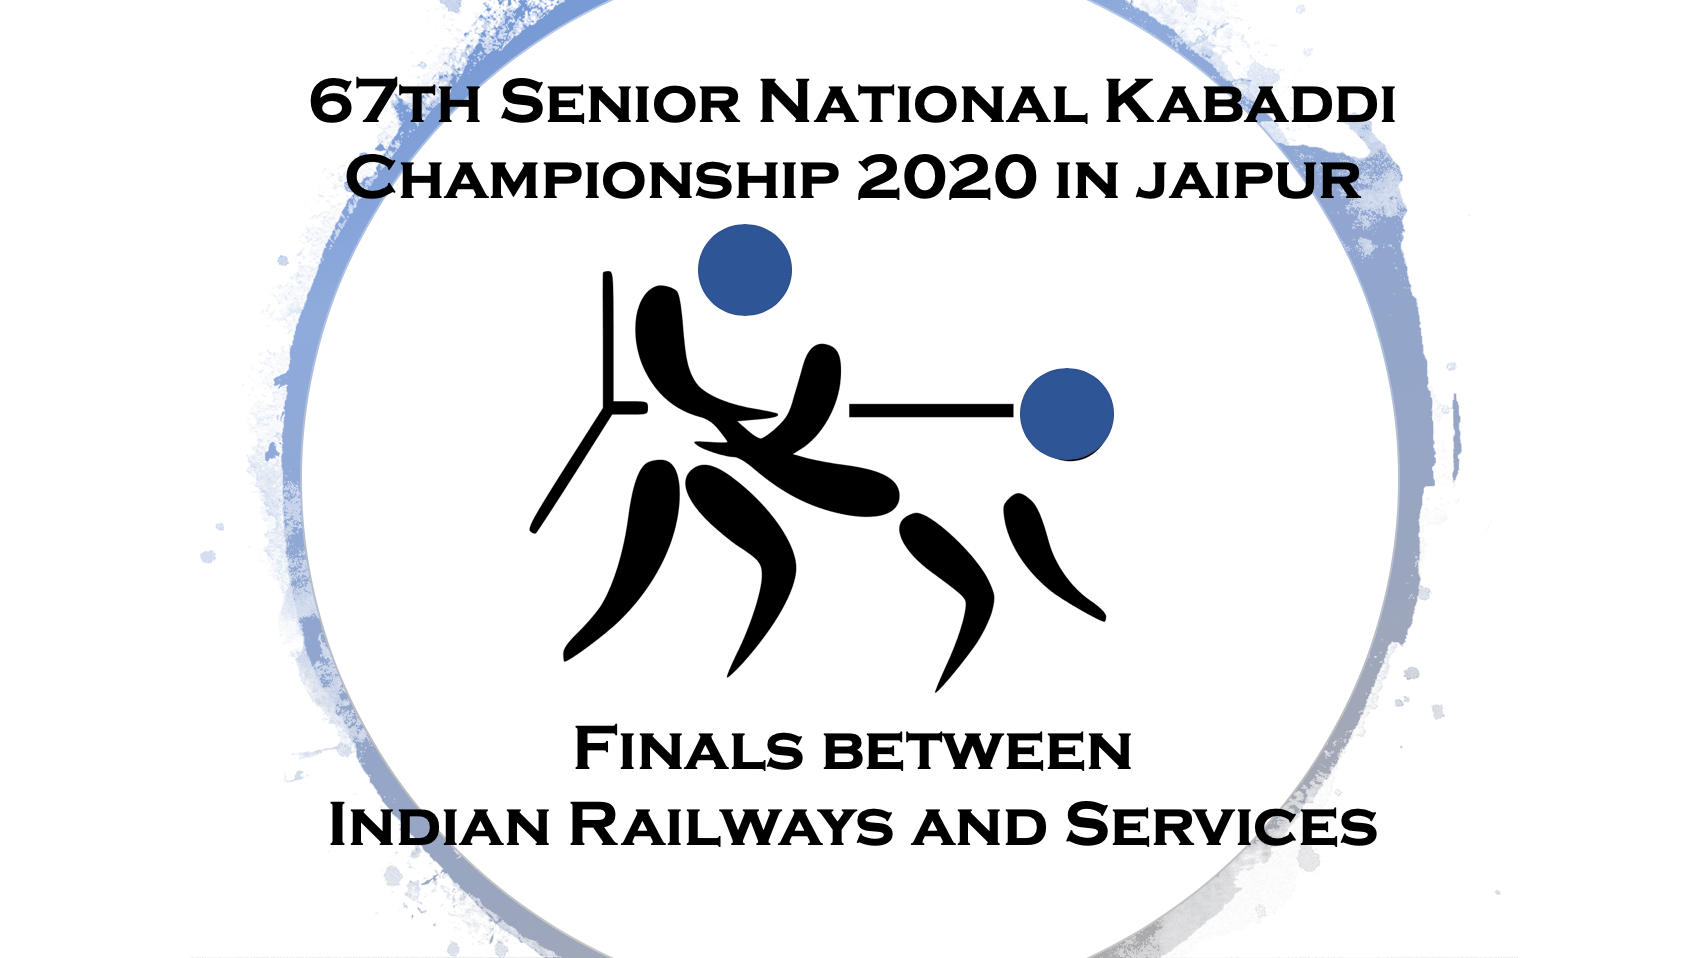 67th senior national kabaddi championship 2020